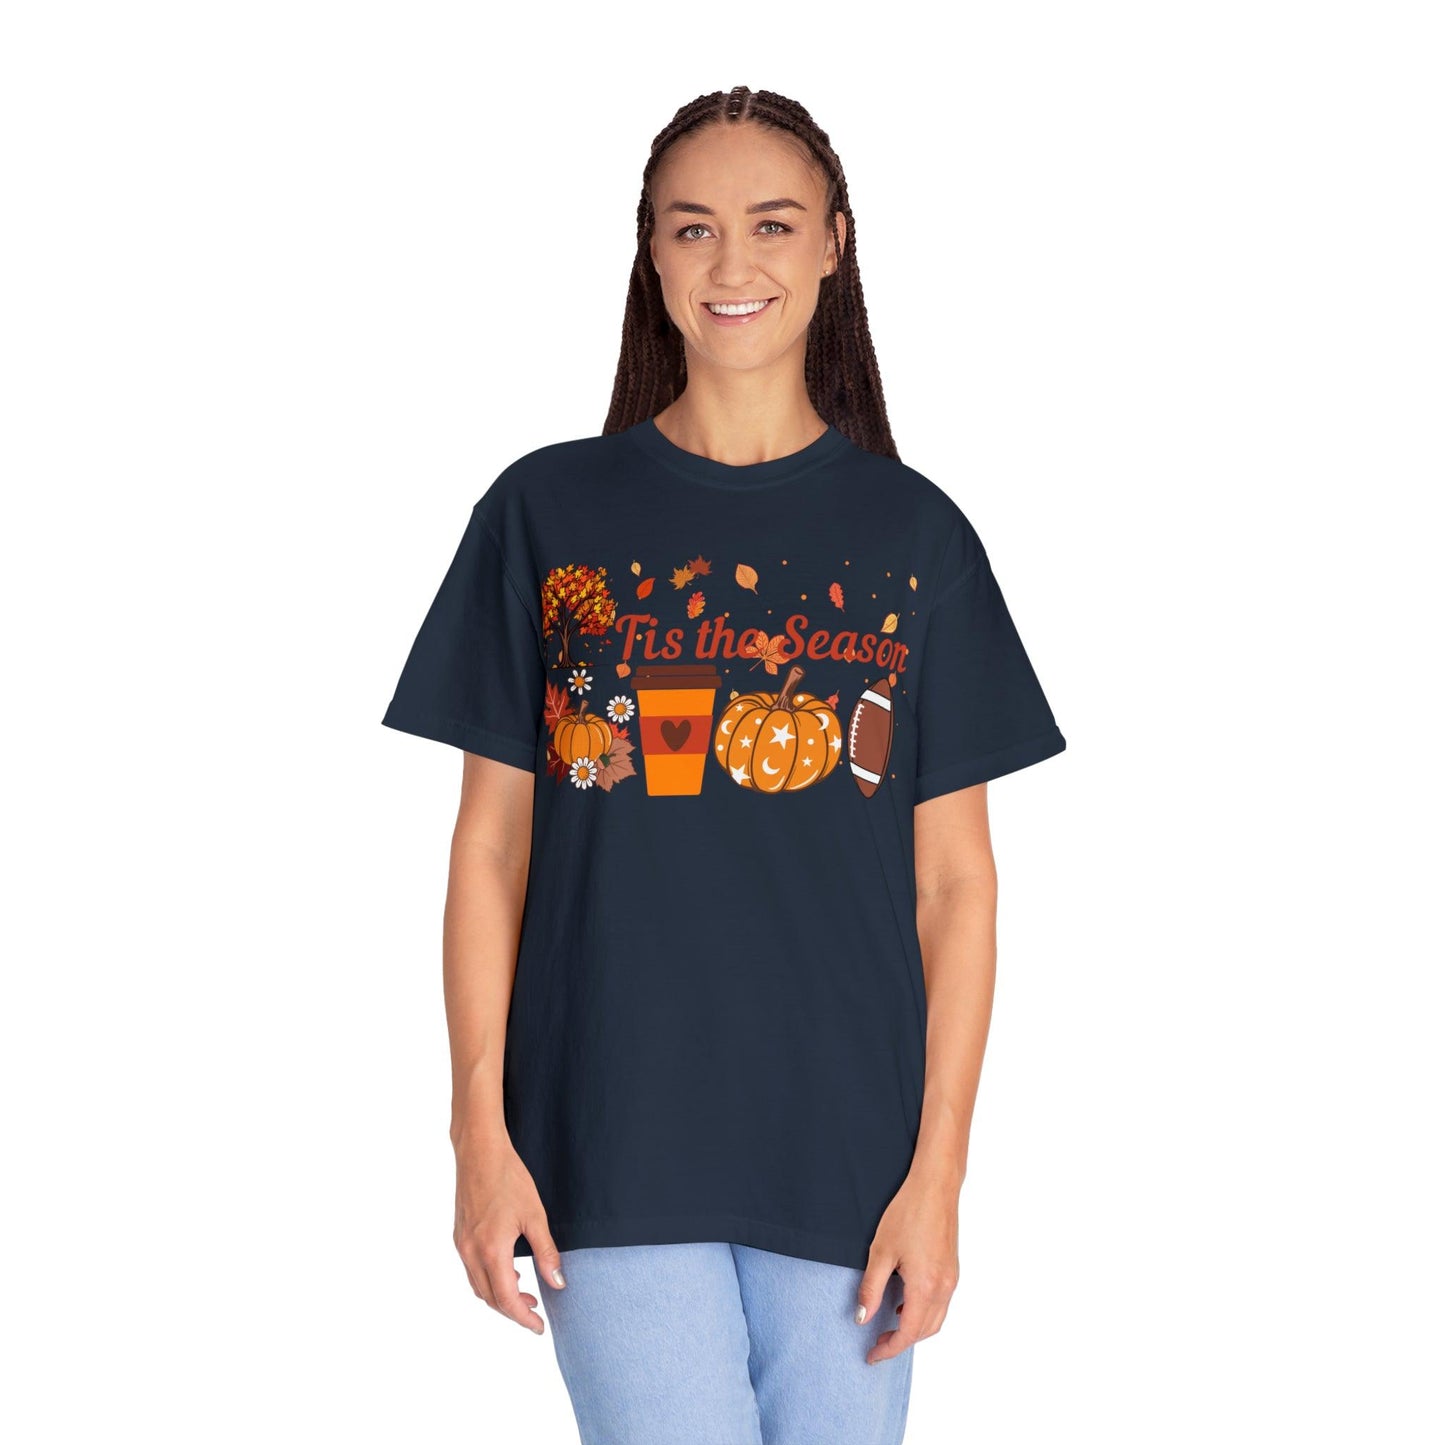 Tis The Season, I love Fall Lover Shirt Gift for Fall, Funny Fall Shirt Thanksgiving Gift